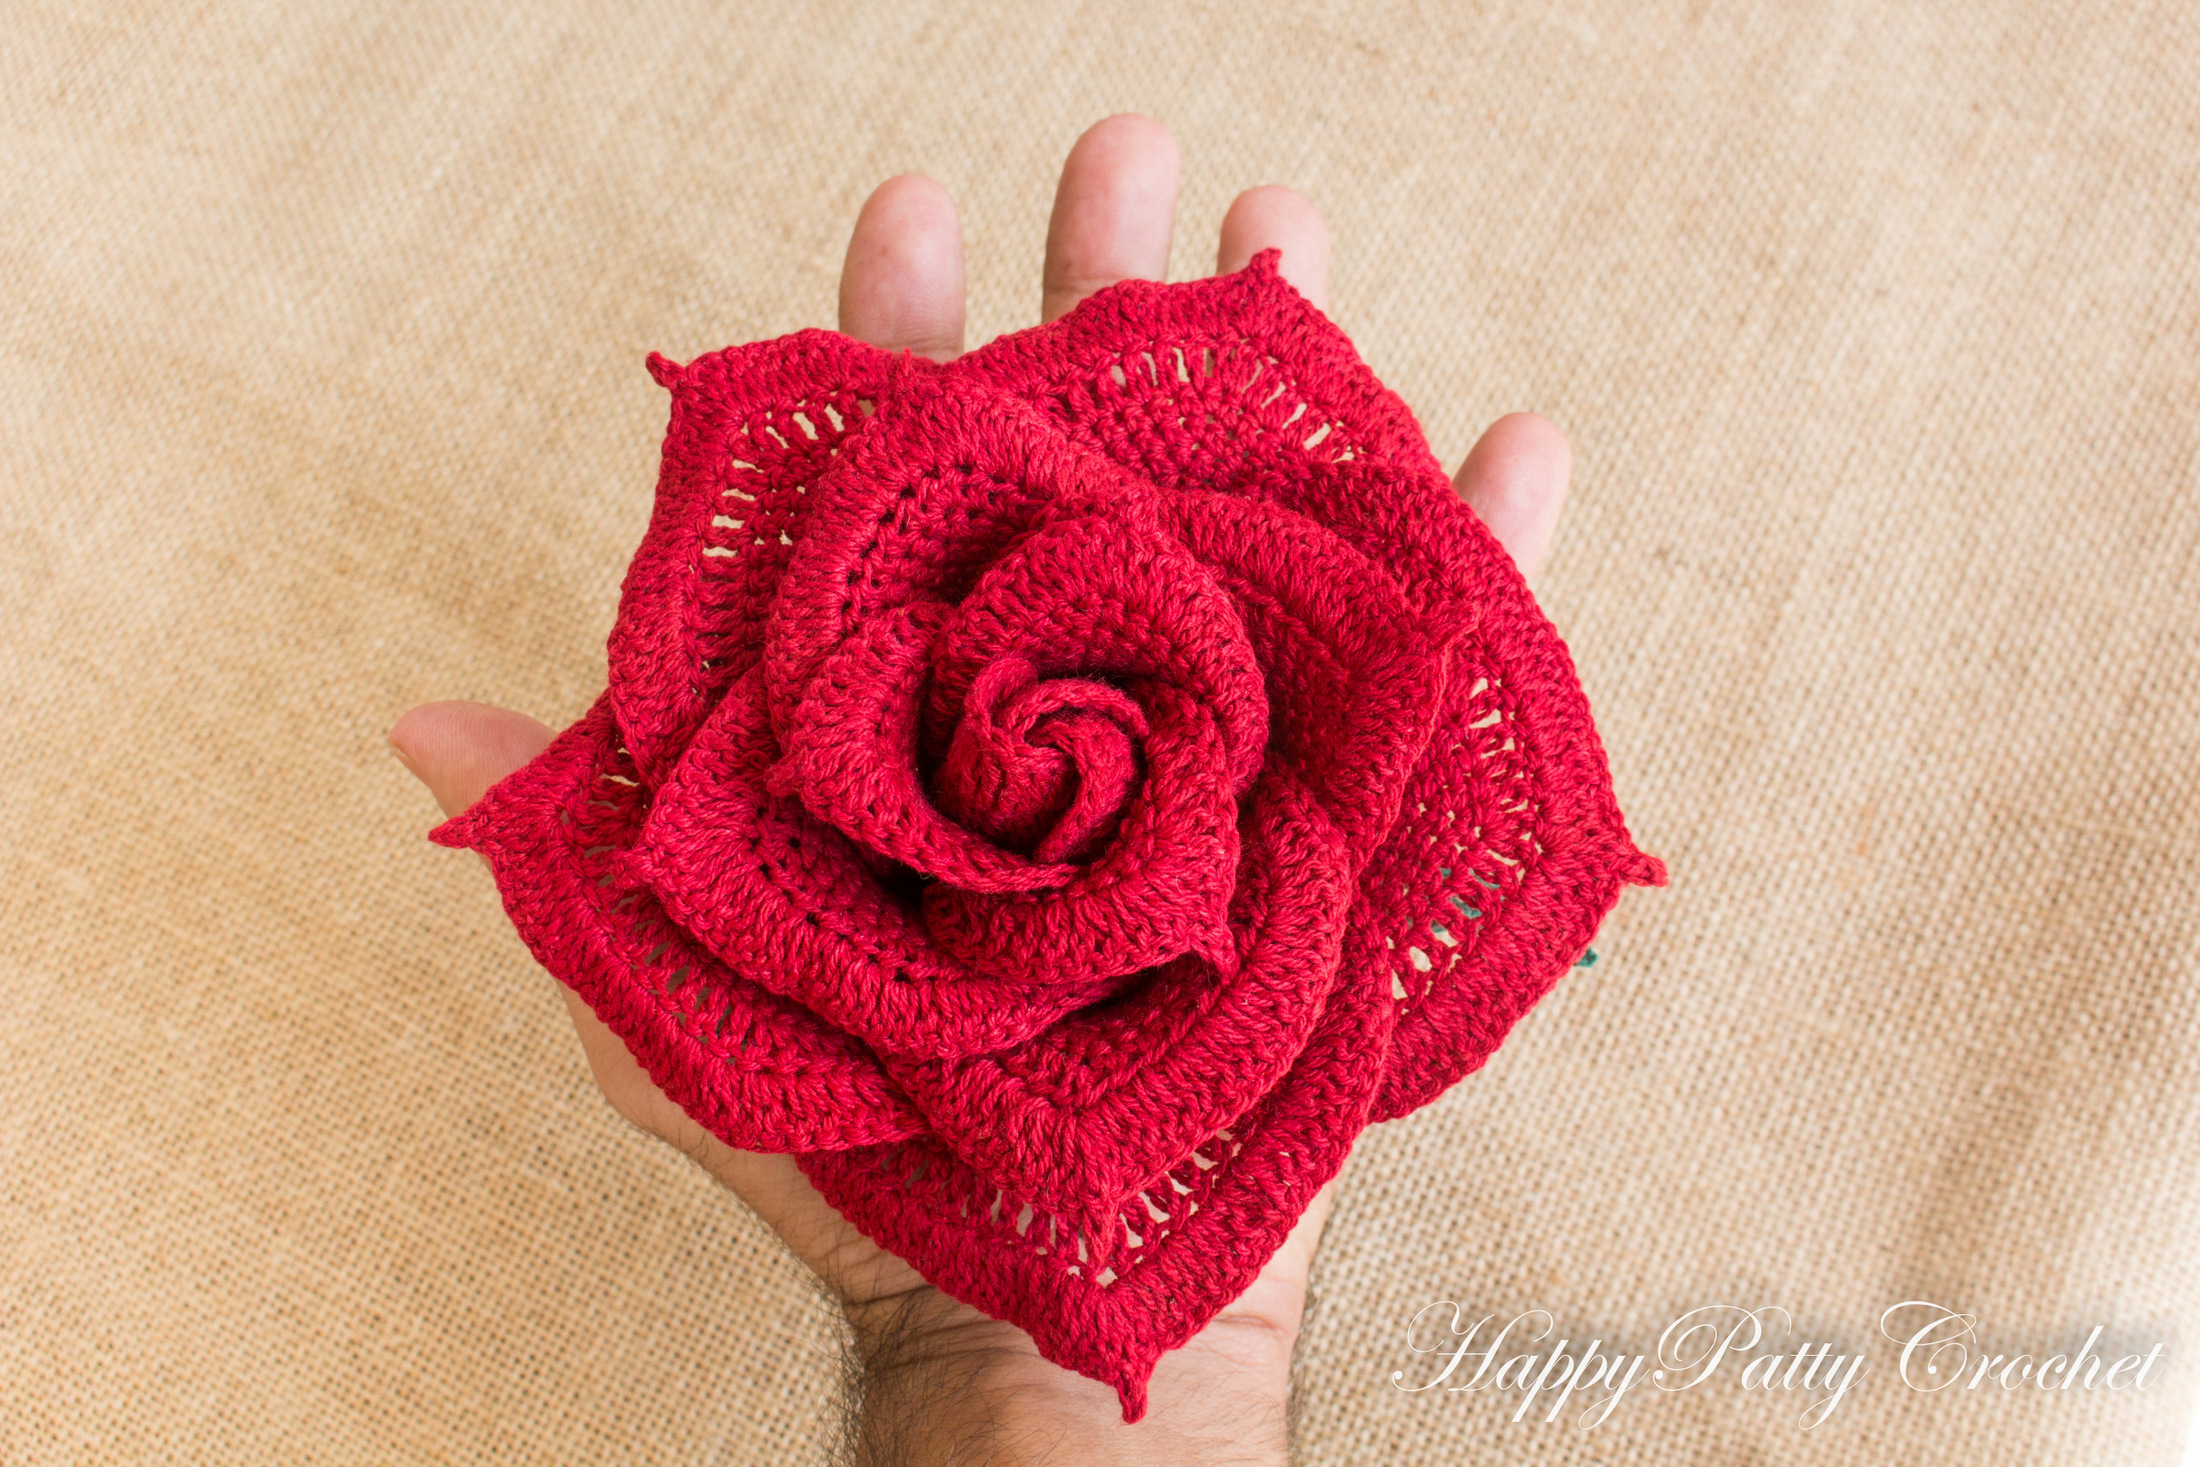 Crochet Rose Pattern Large Crochet Rose Pattern Happy Patty Crochet